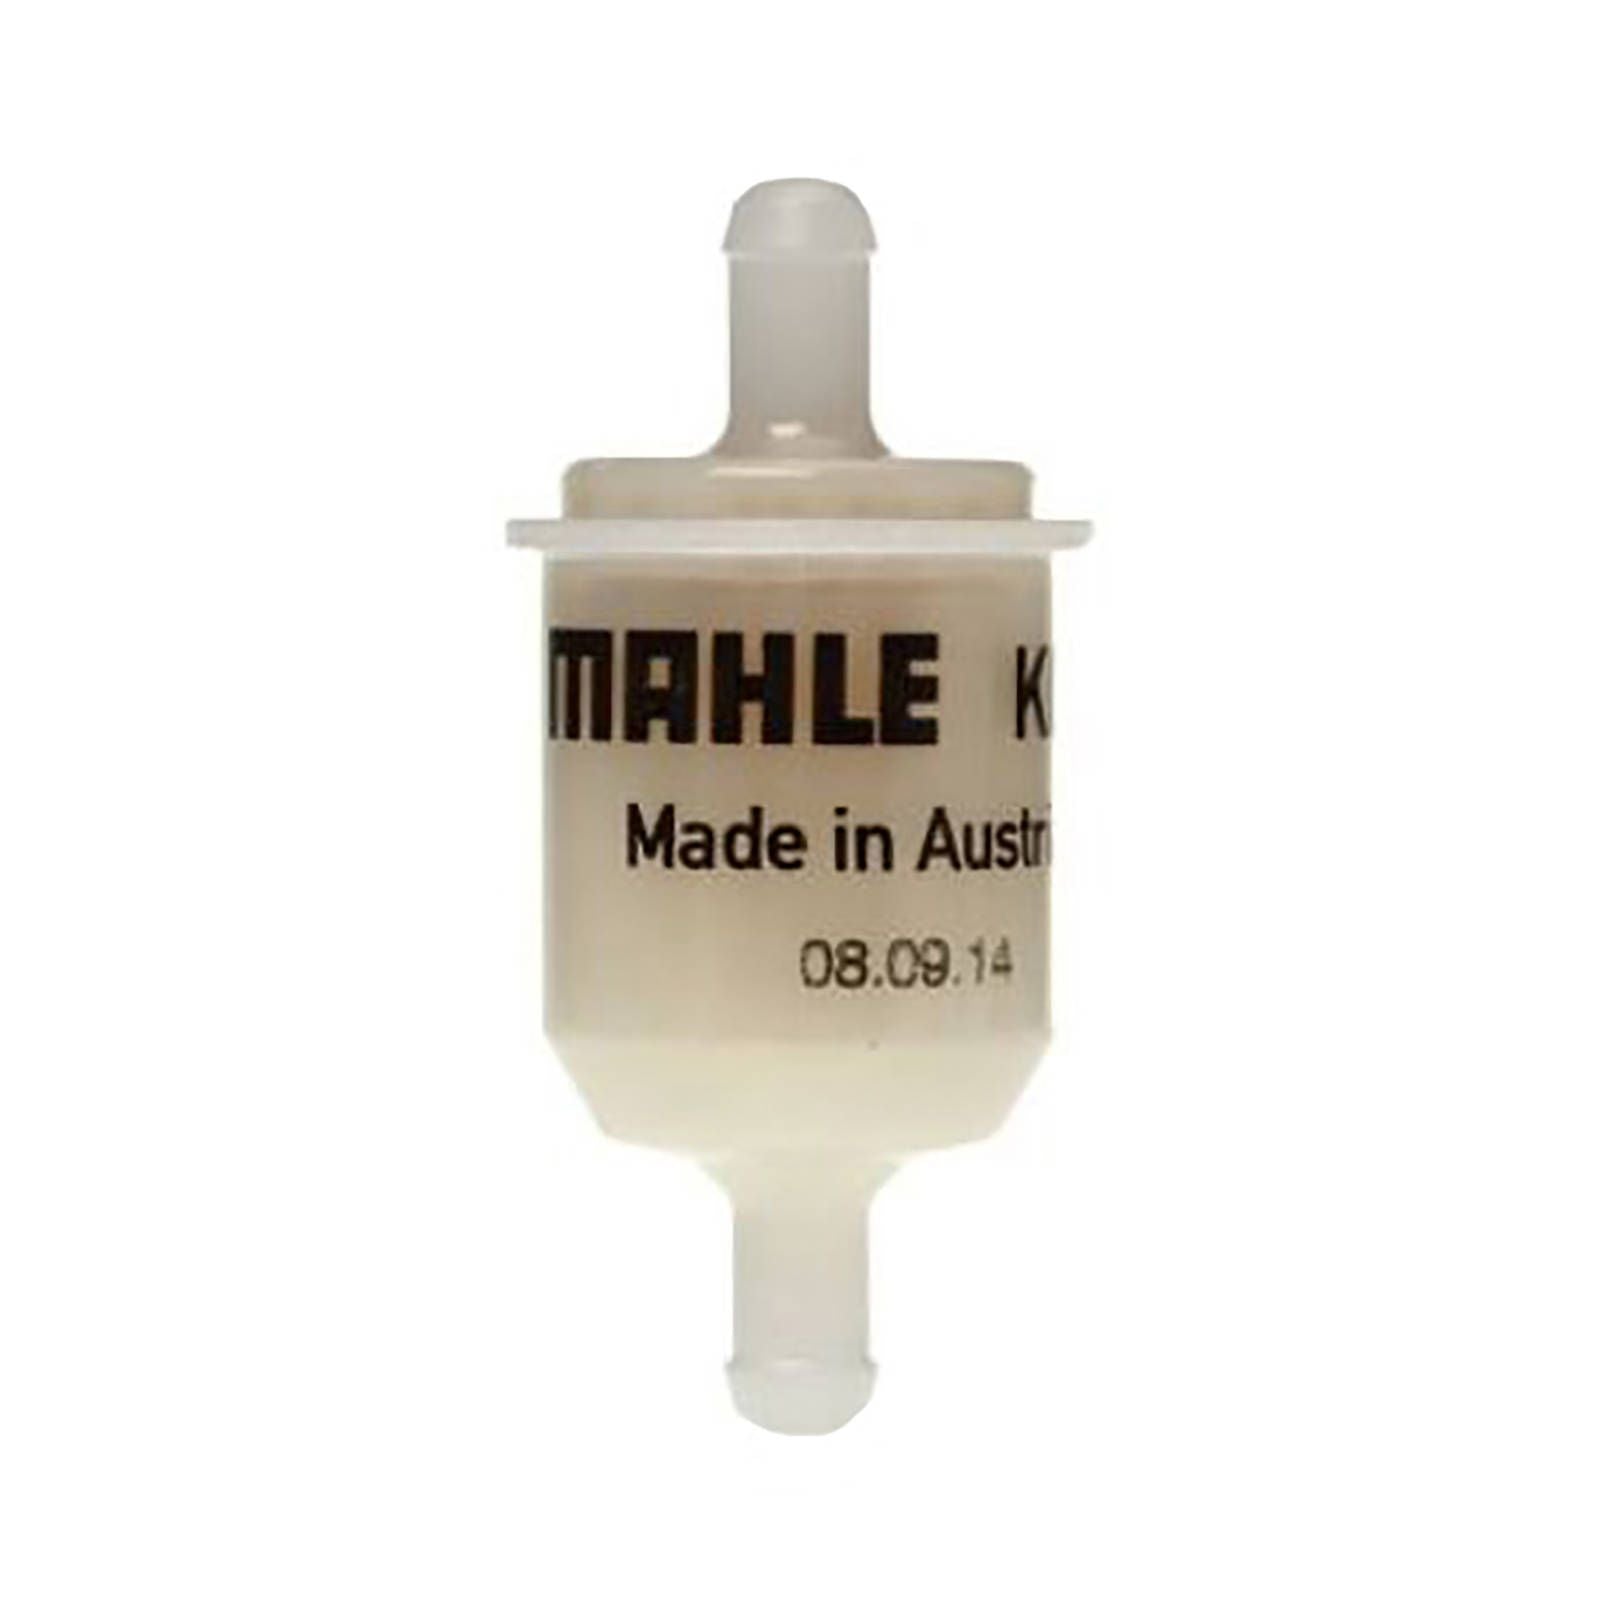 New QUANTUM Mahle Fuel Filter #QFMAHLE03